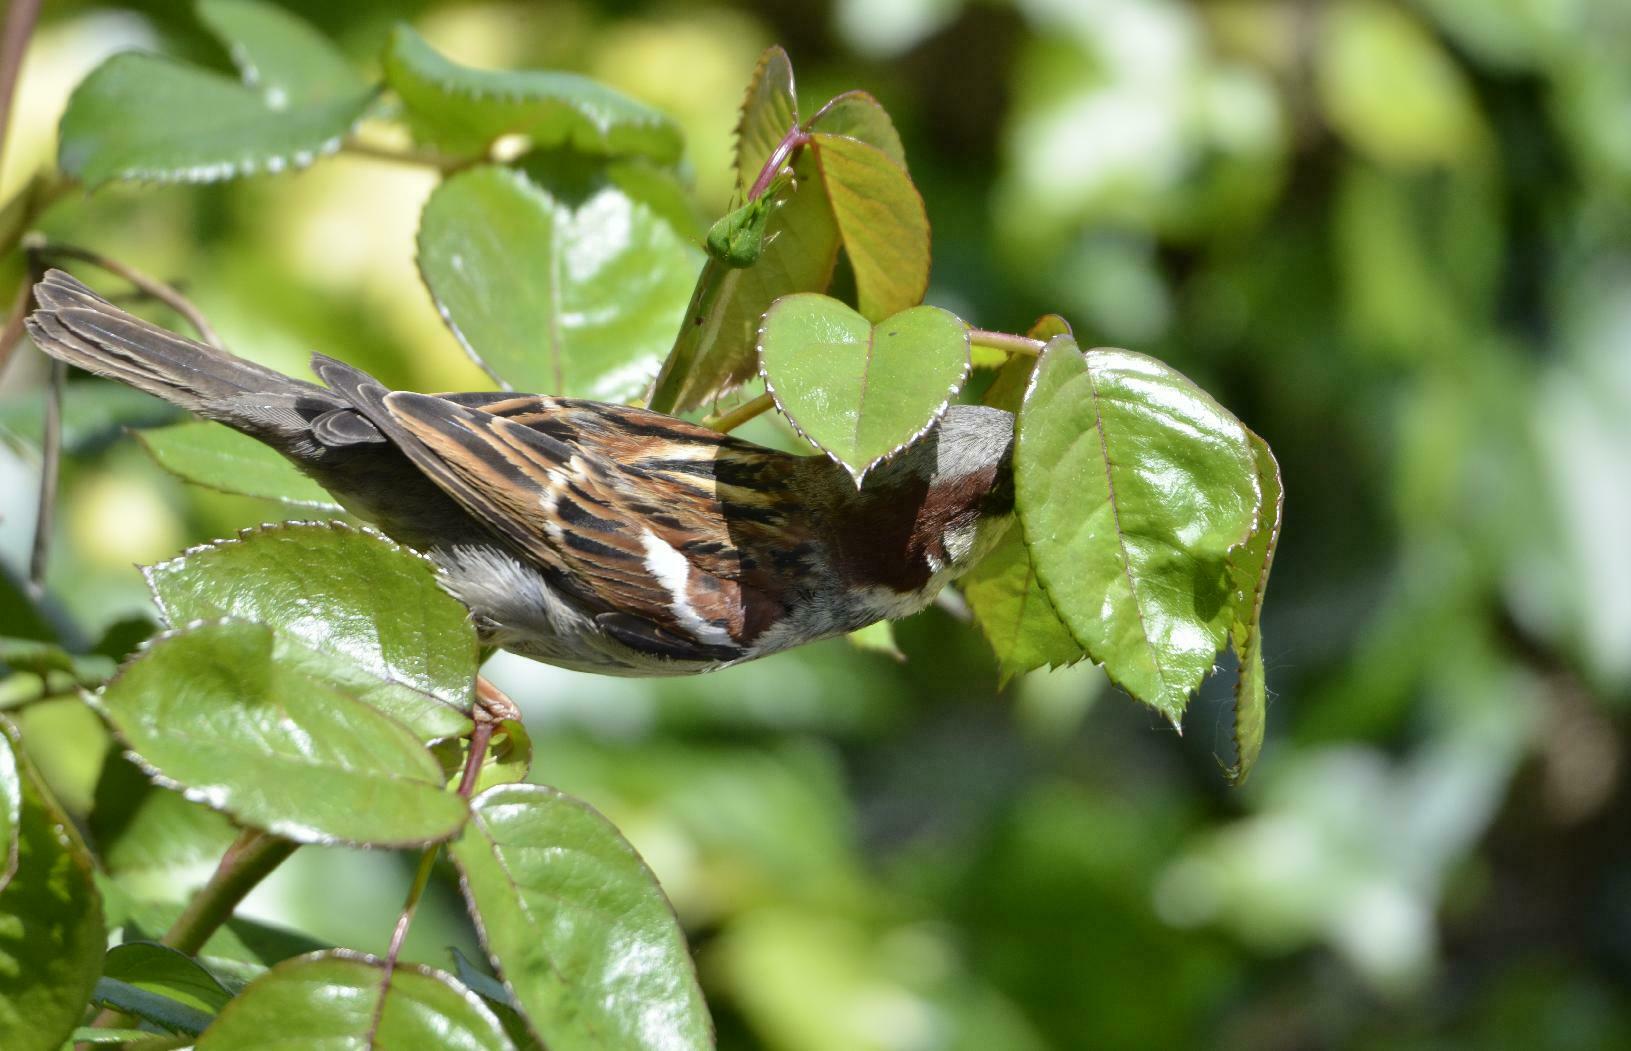 House sparrow feeding on something